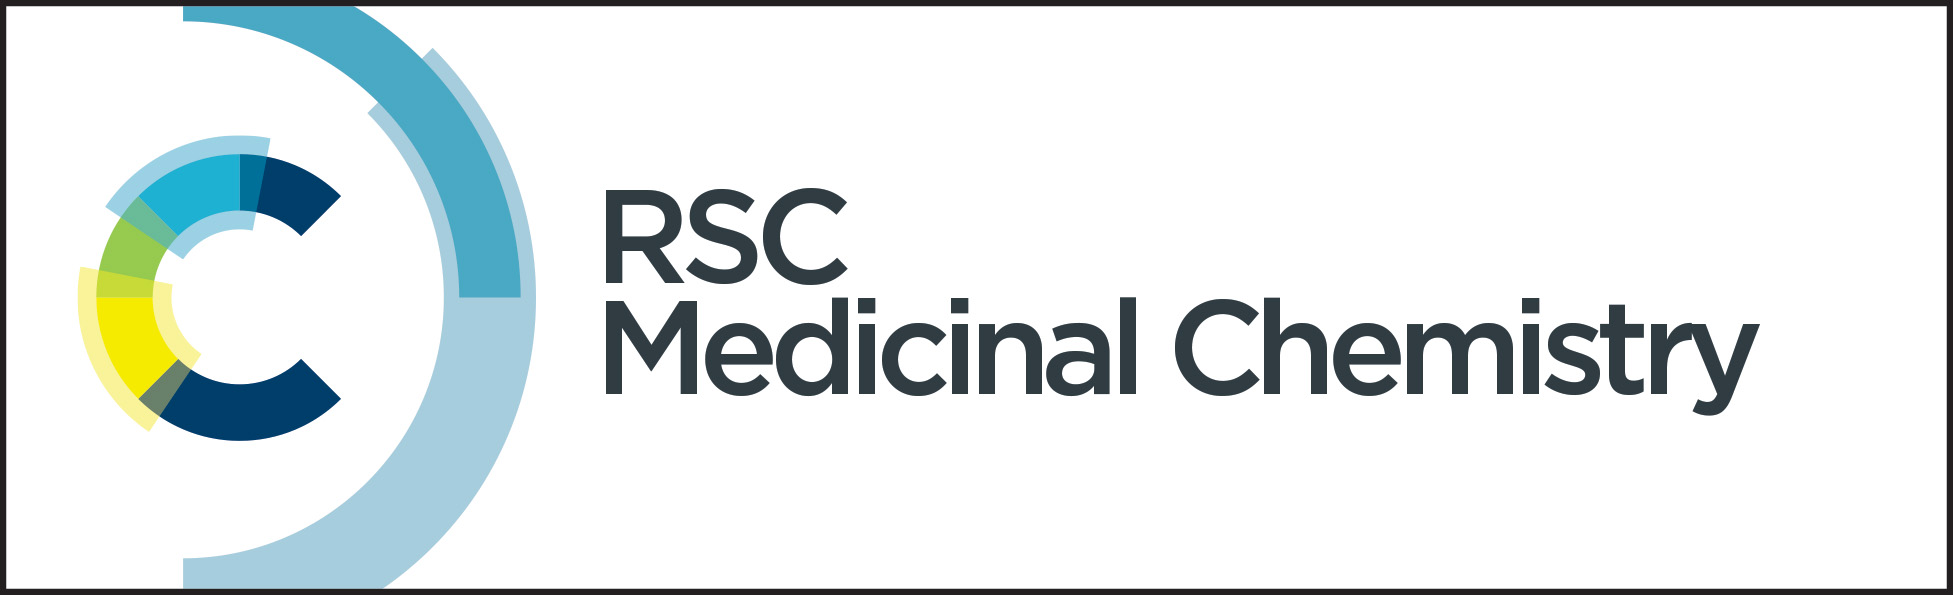 RSC Medicinal Chemistry